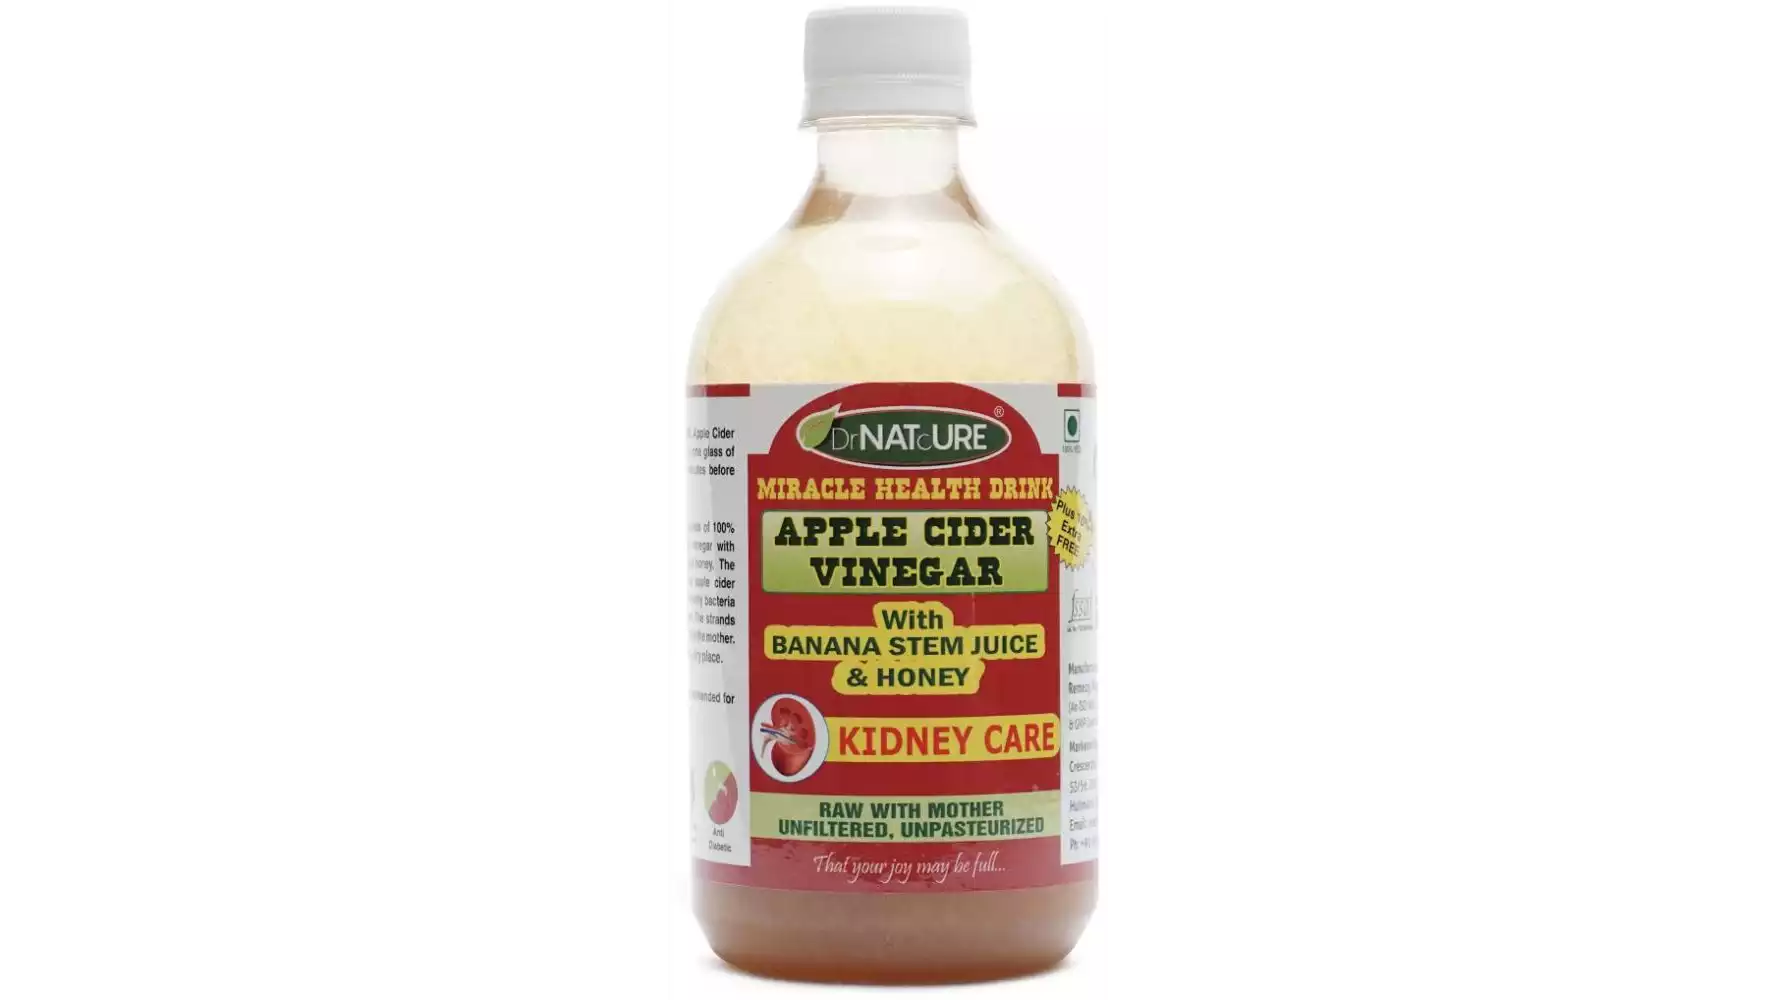 DrNATcURE Apple Cider Vinegar With Banana Stem Juice And Honey (500ml)